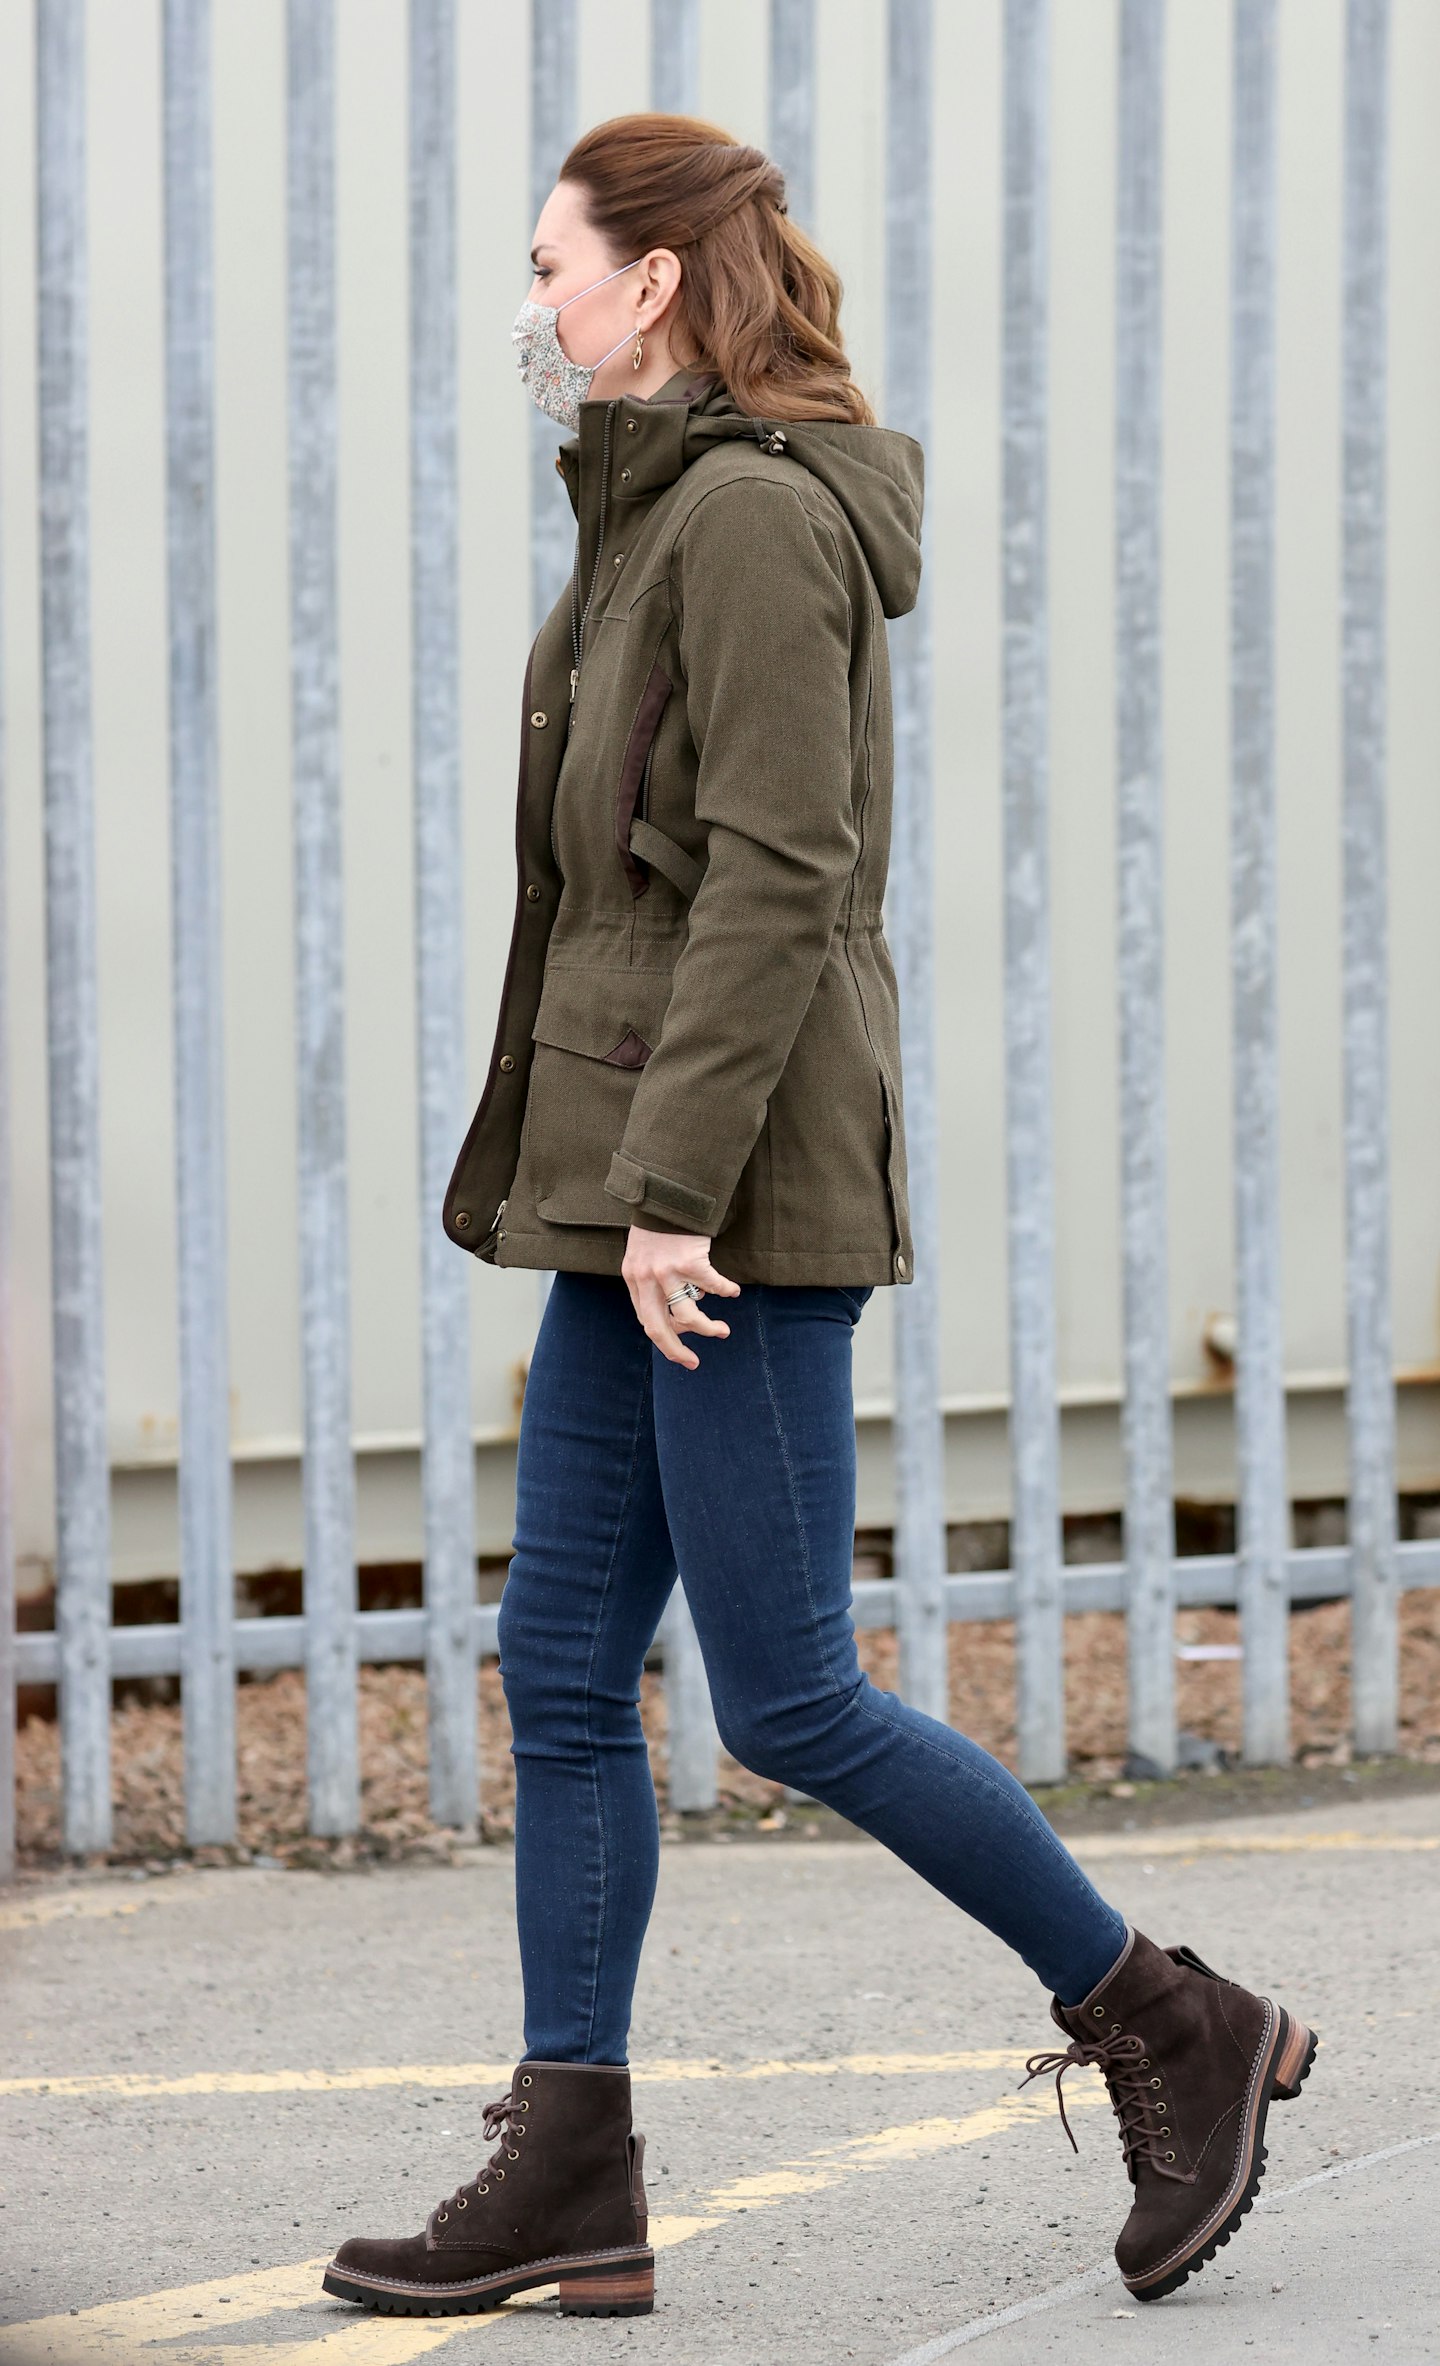 Kate Middleton wearing walking boots and a khaki jacket 